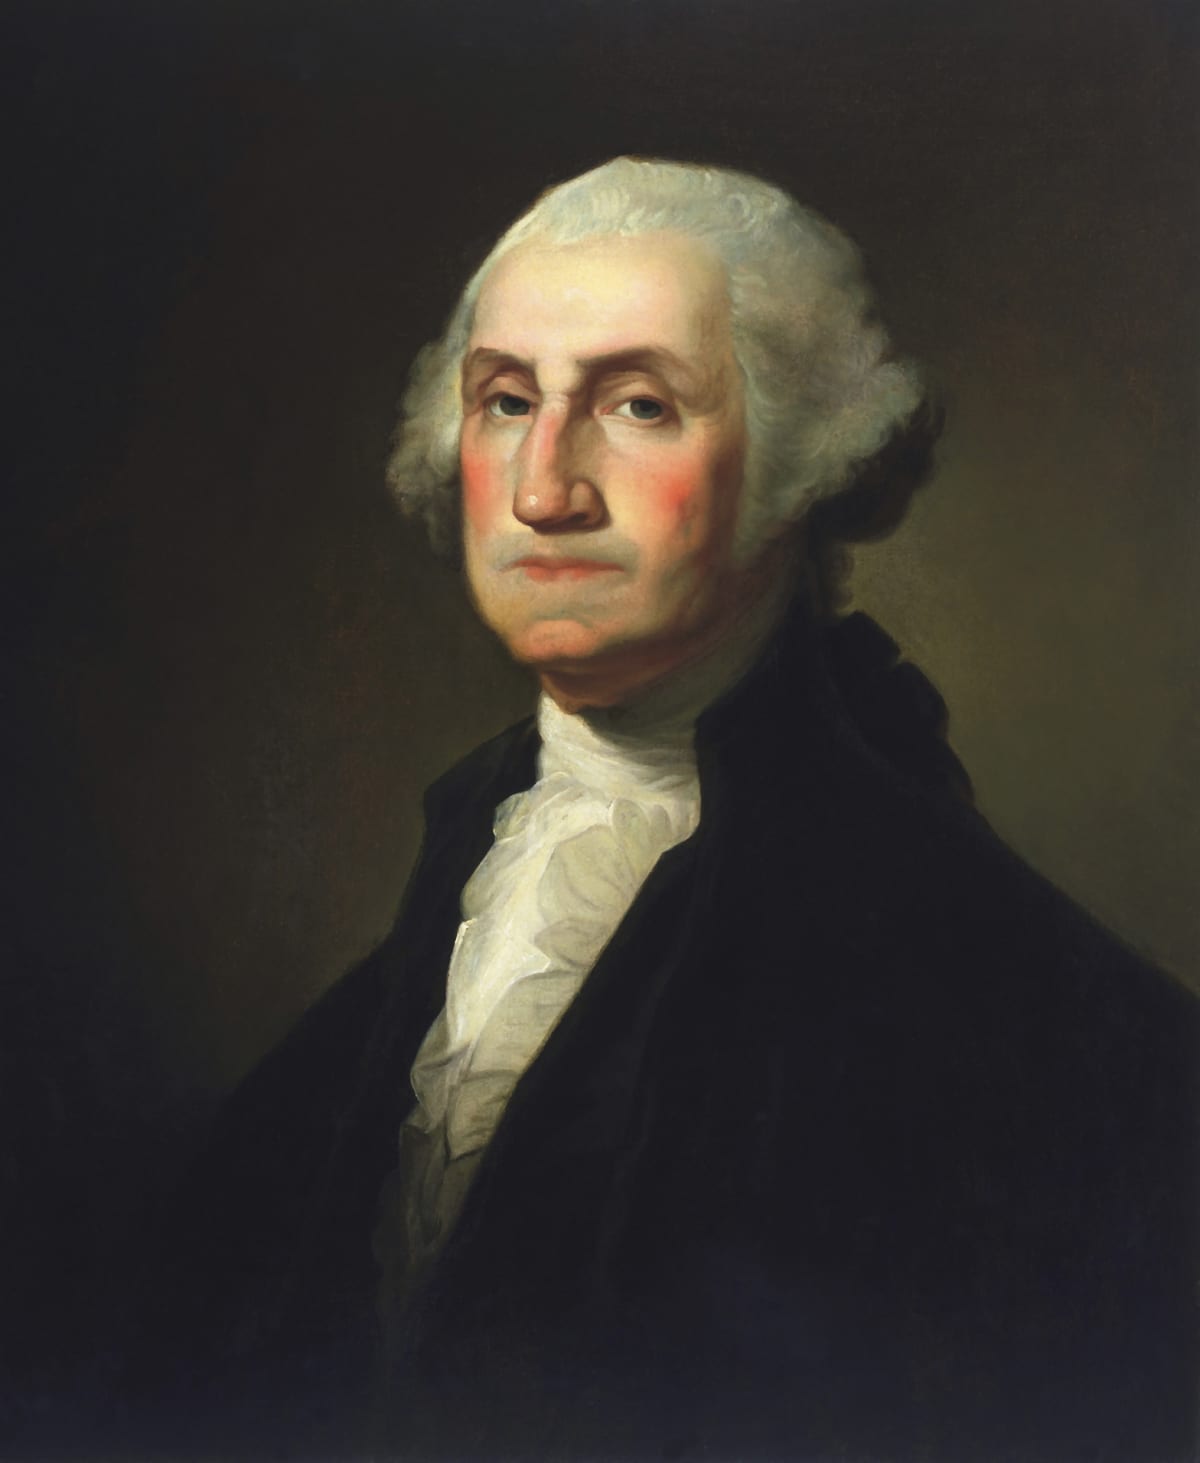 Painted portrait of George Washington 